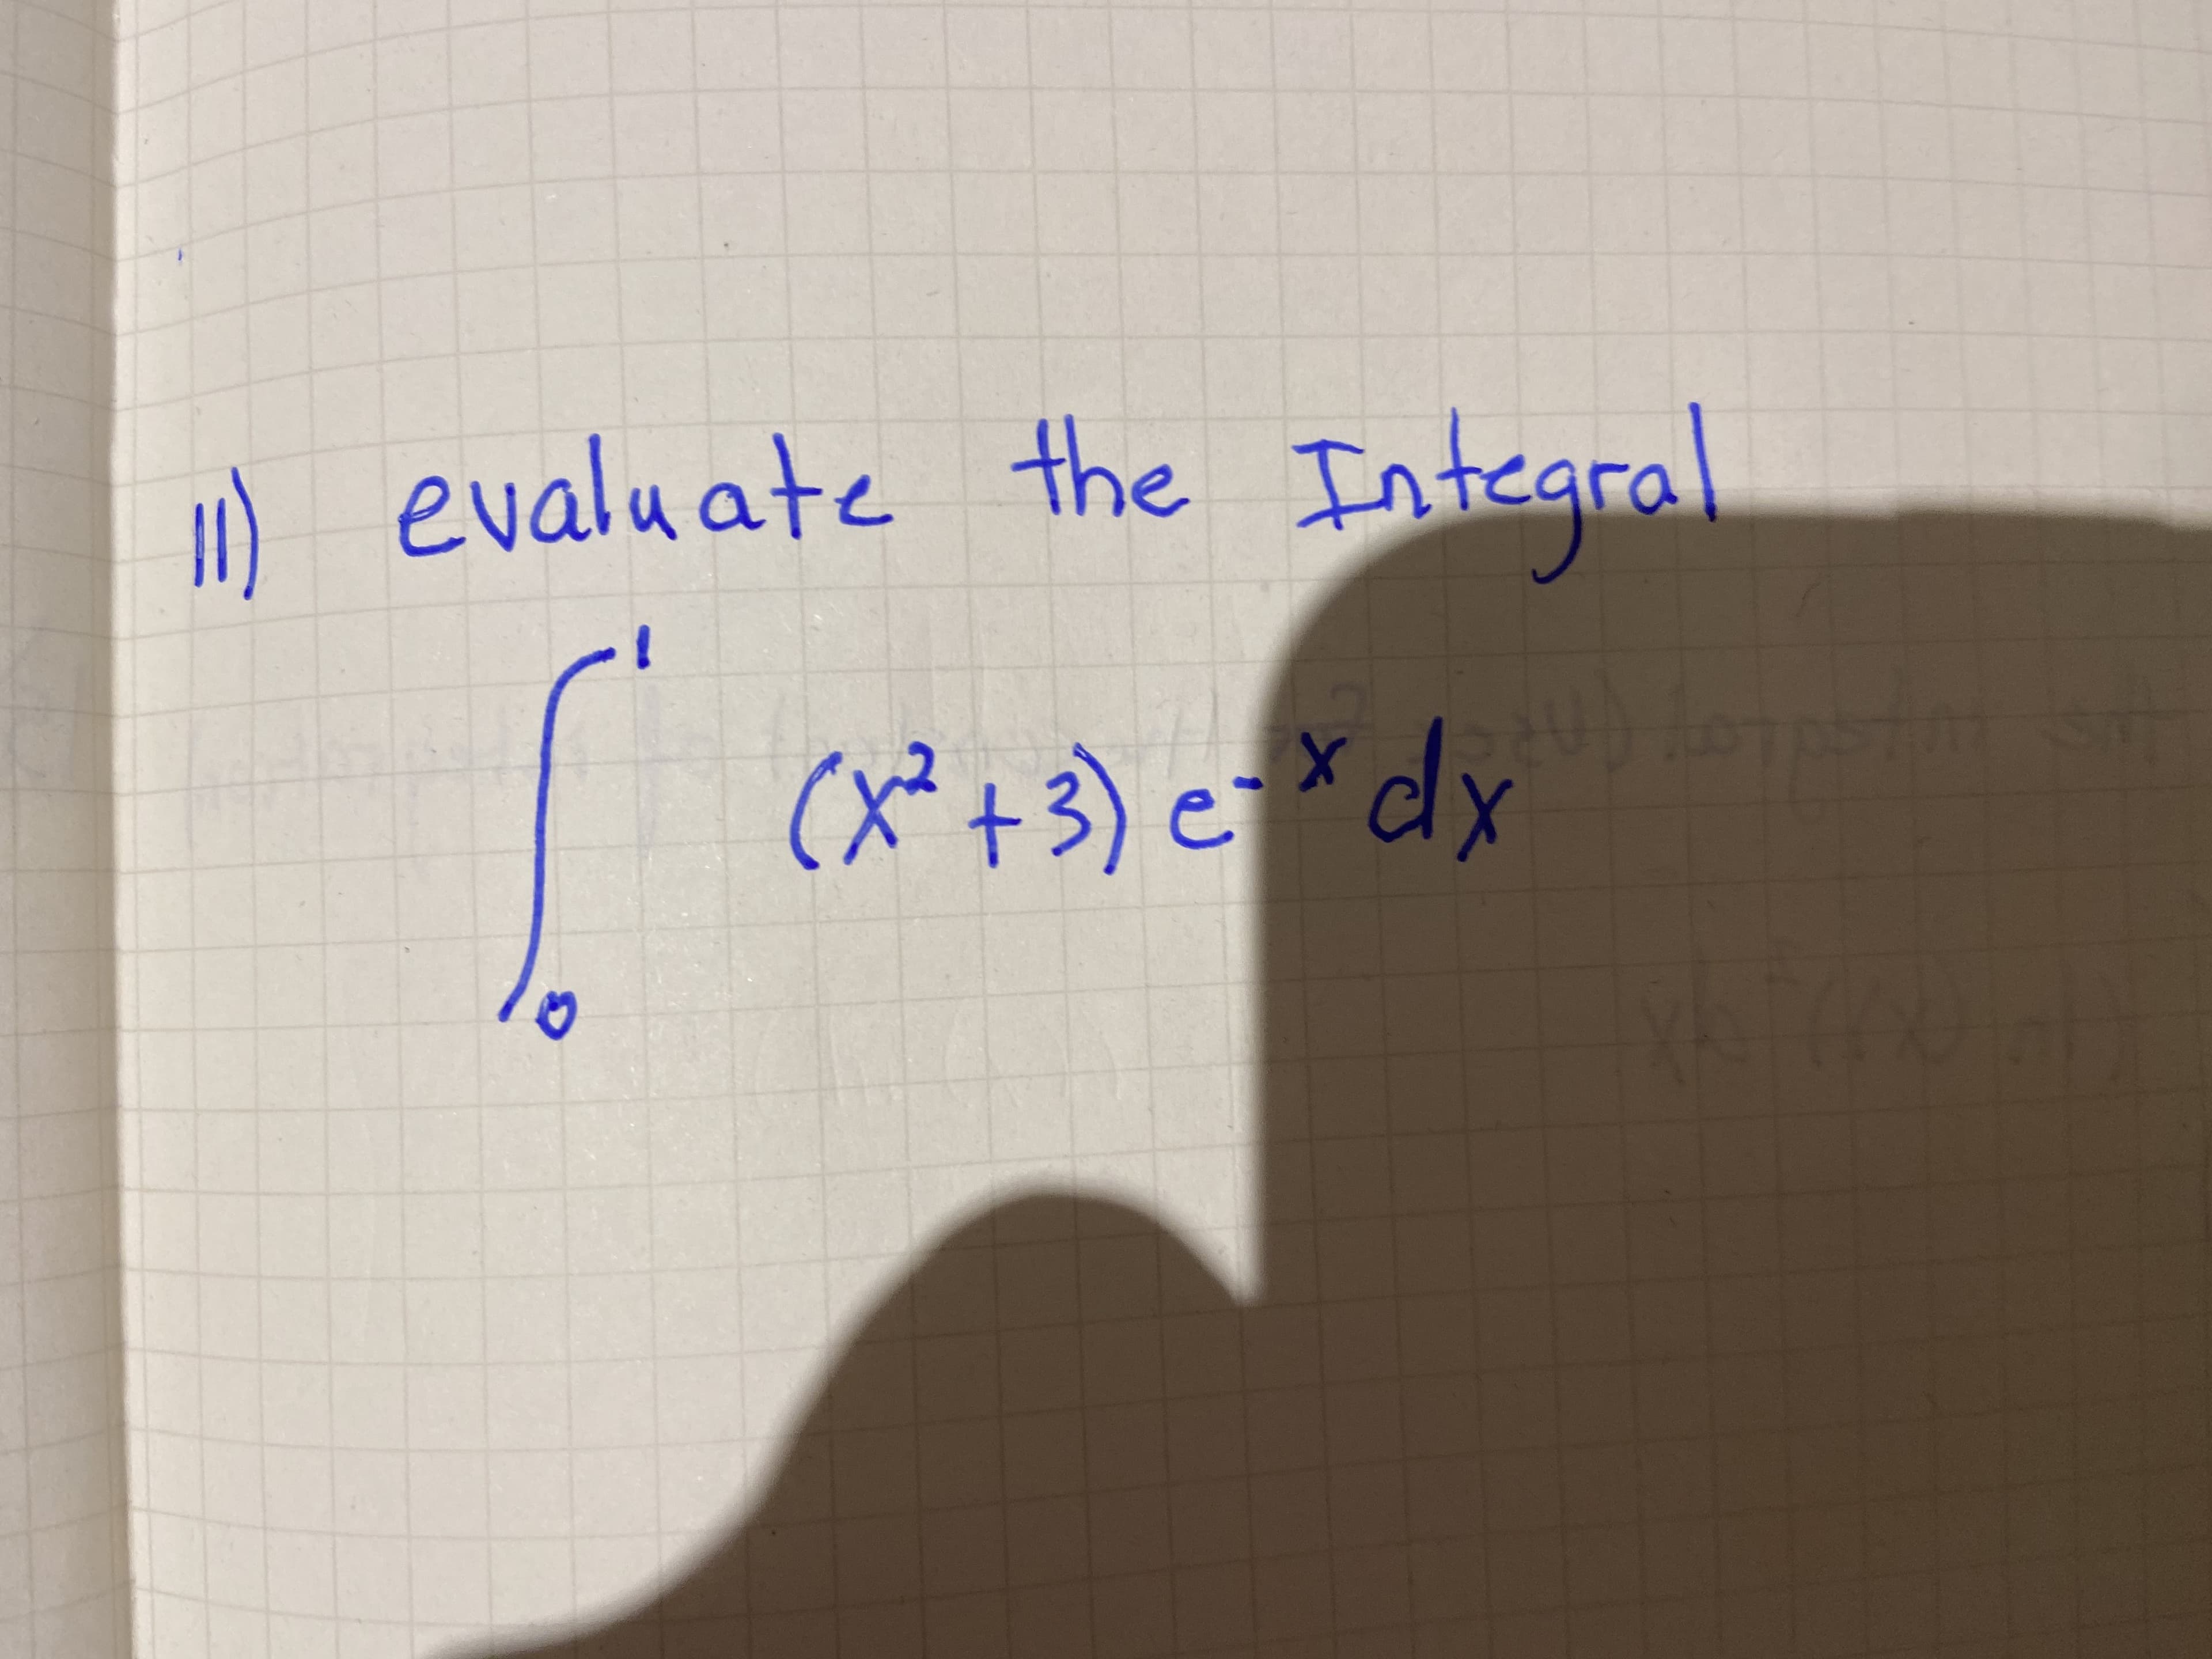 n) the Integral
evalu ate
car
1-
(X² +3) e Xdx
